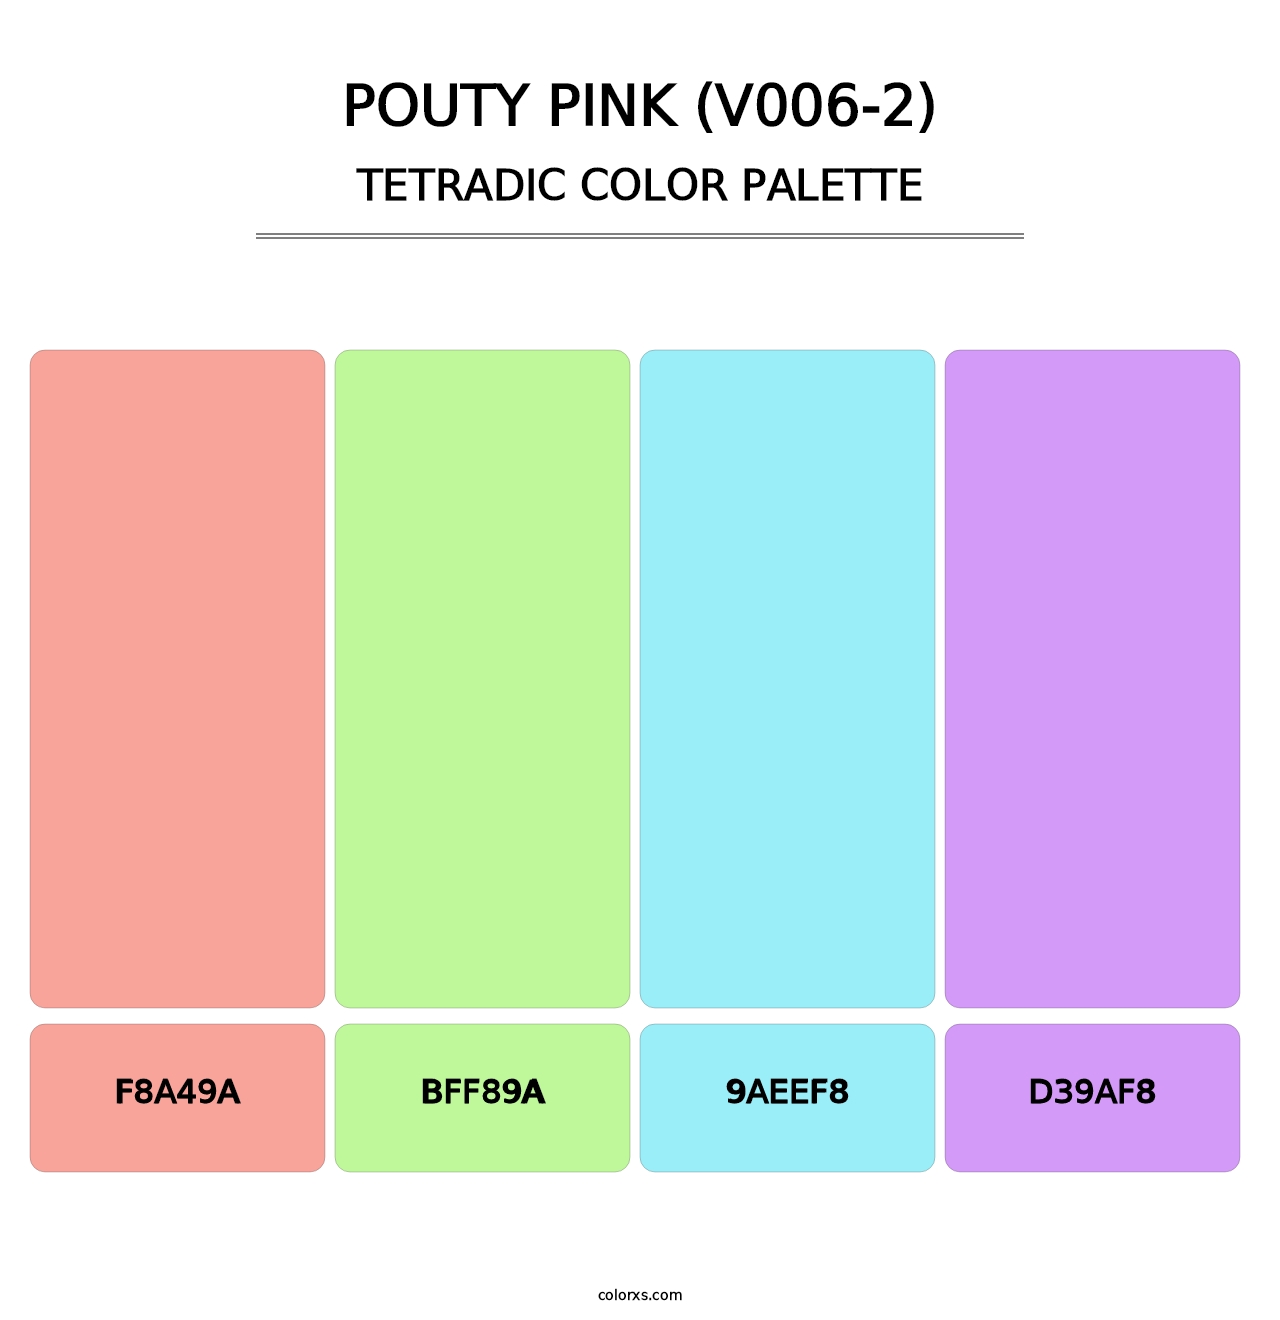 Pouty Pink (V006-2) - Tetradic Color Palette